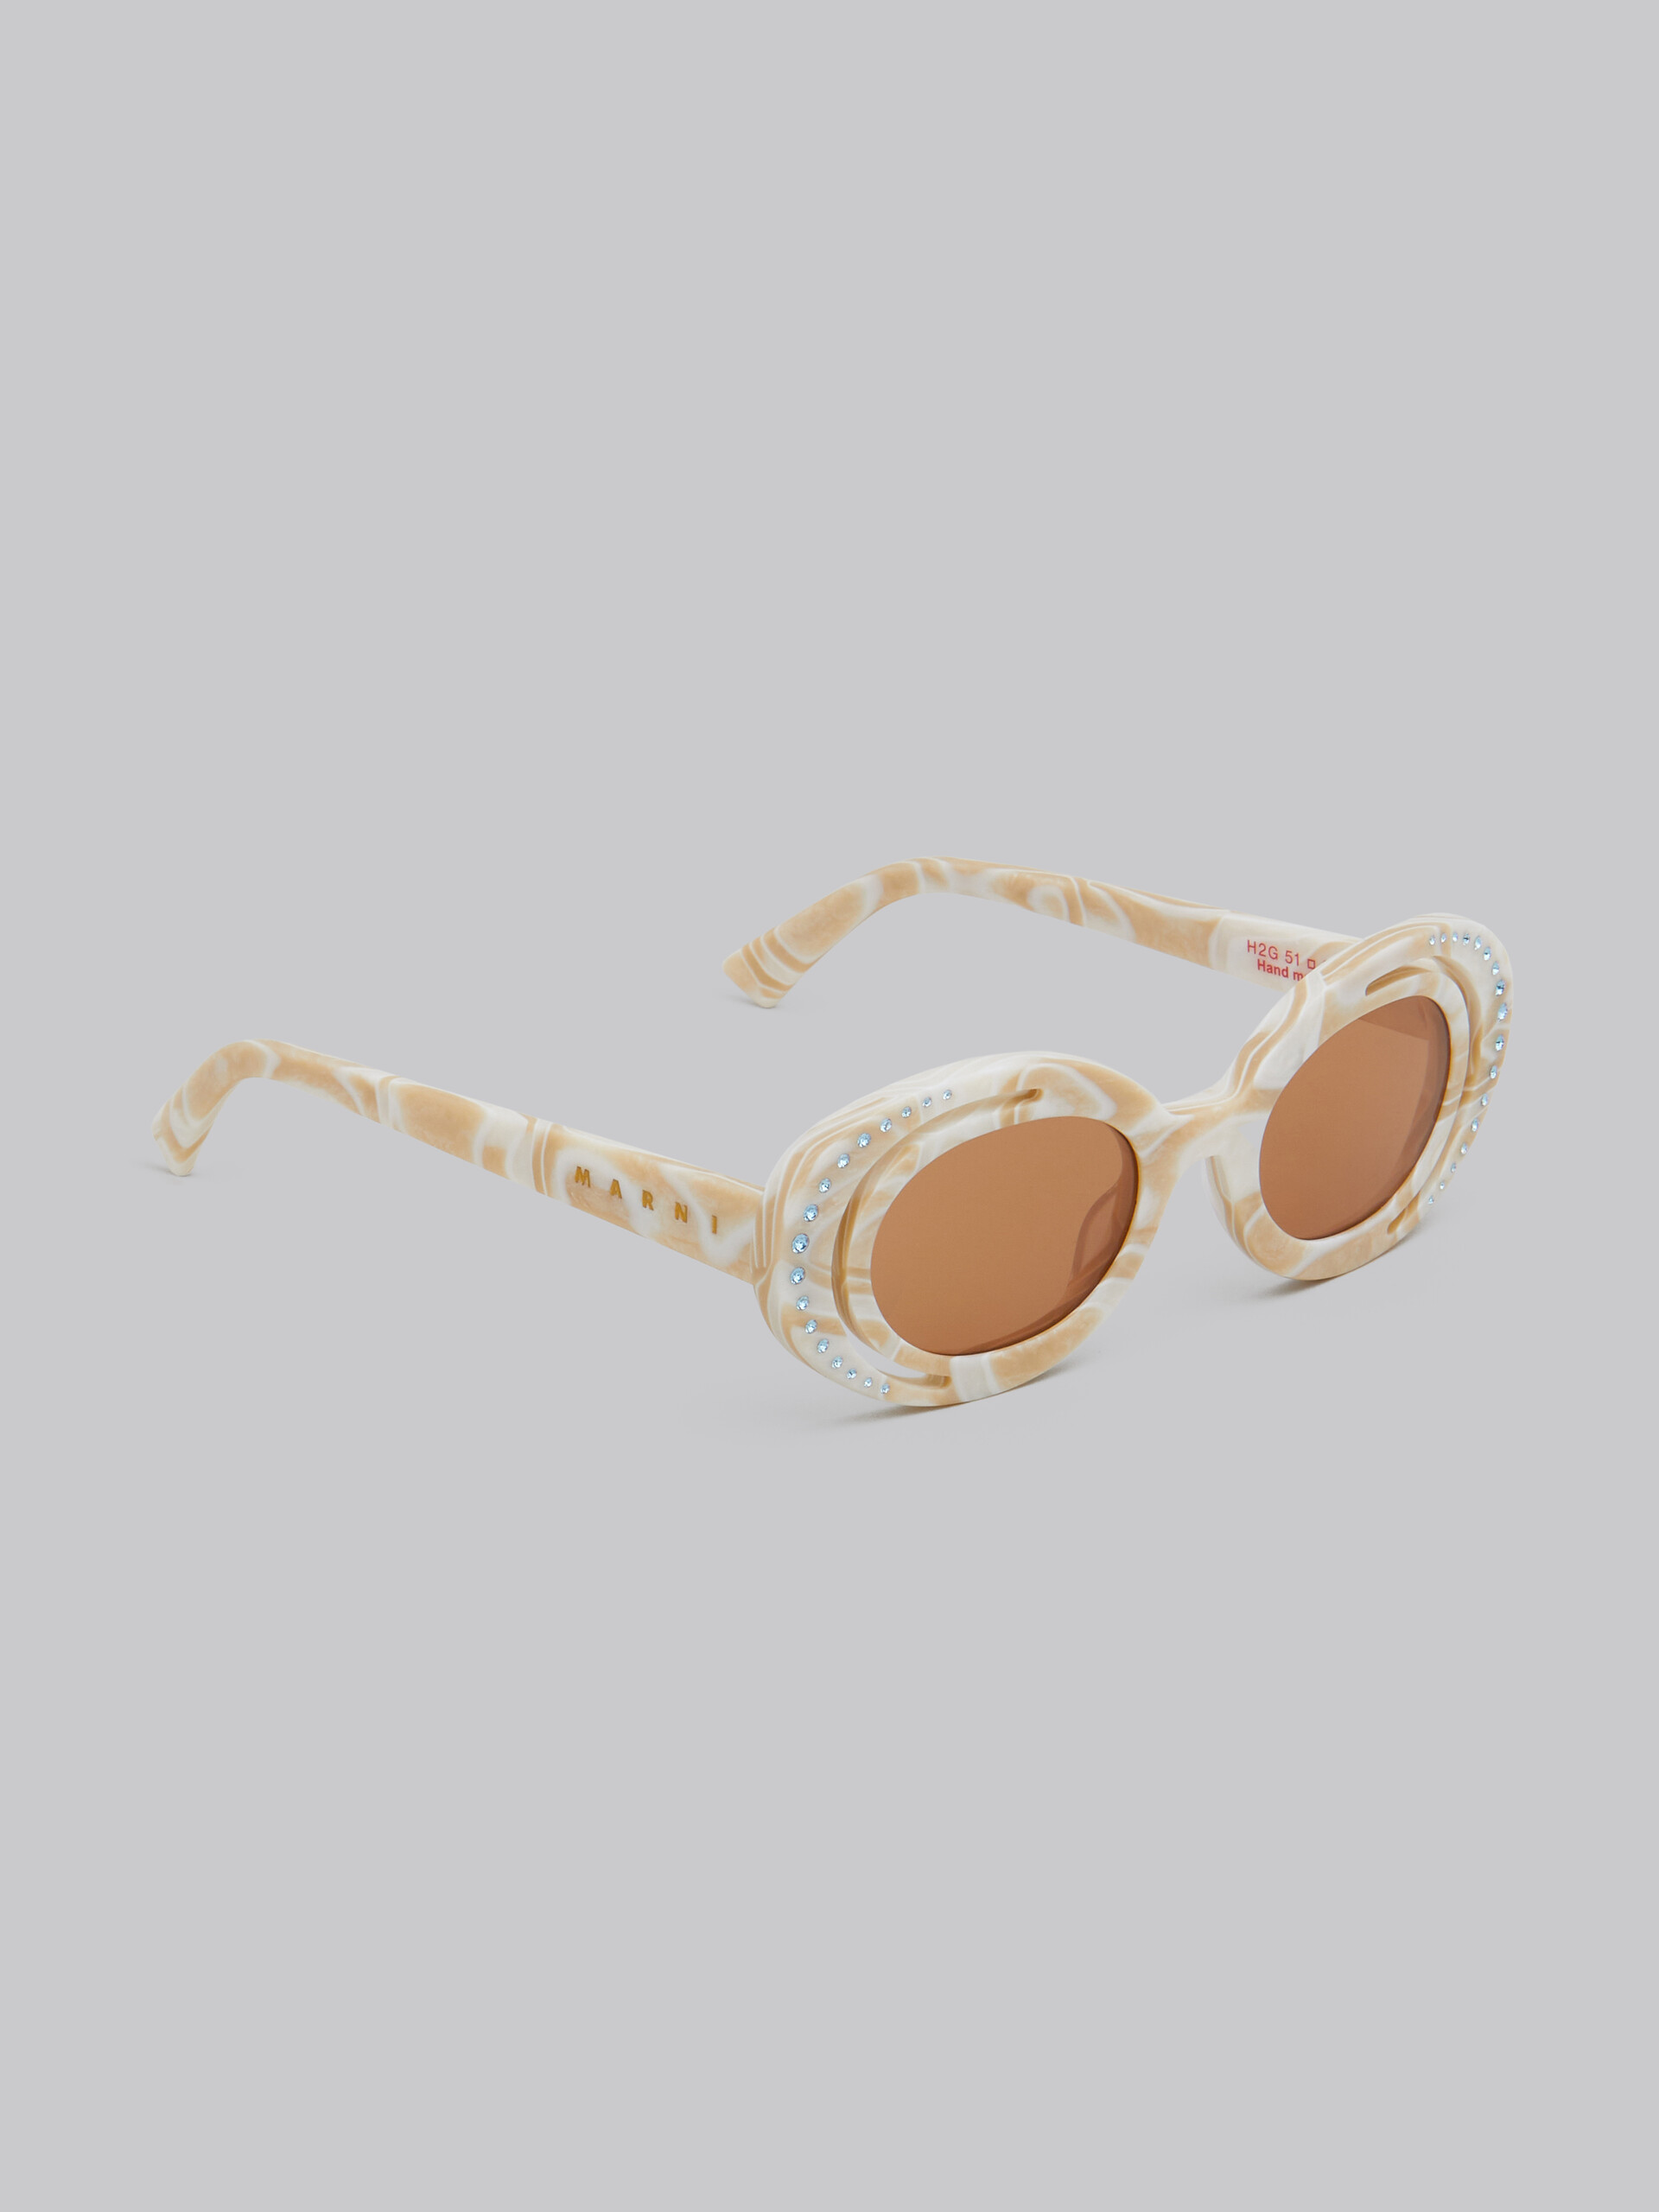 Zion Canyon white pearl sunglasses - Optical - Image 3